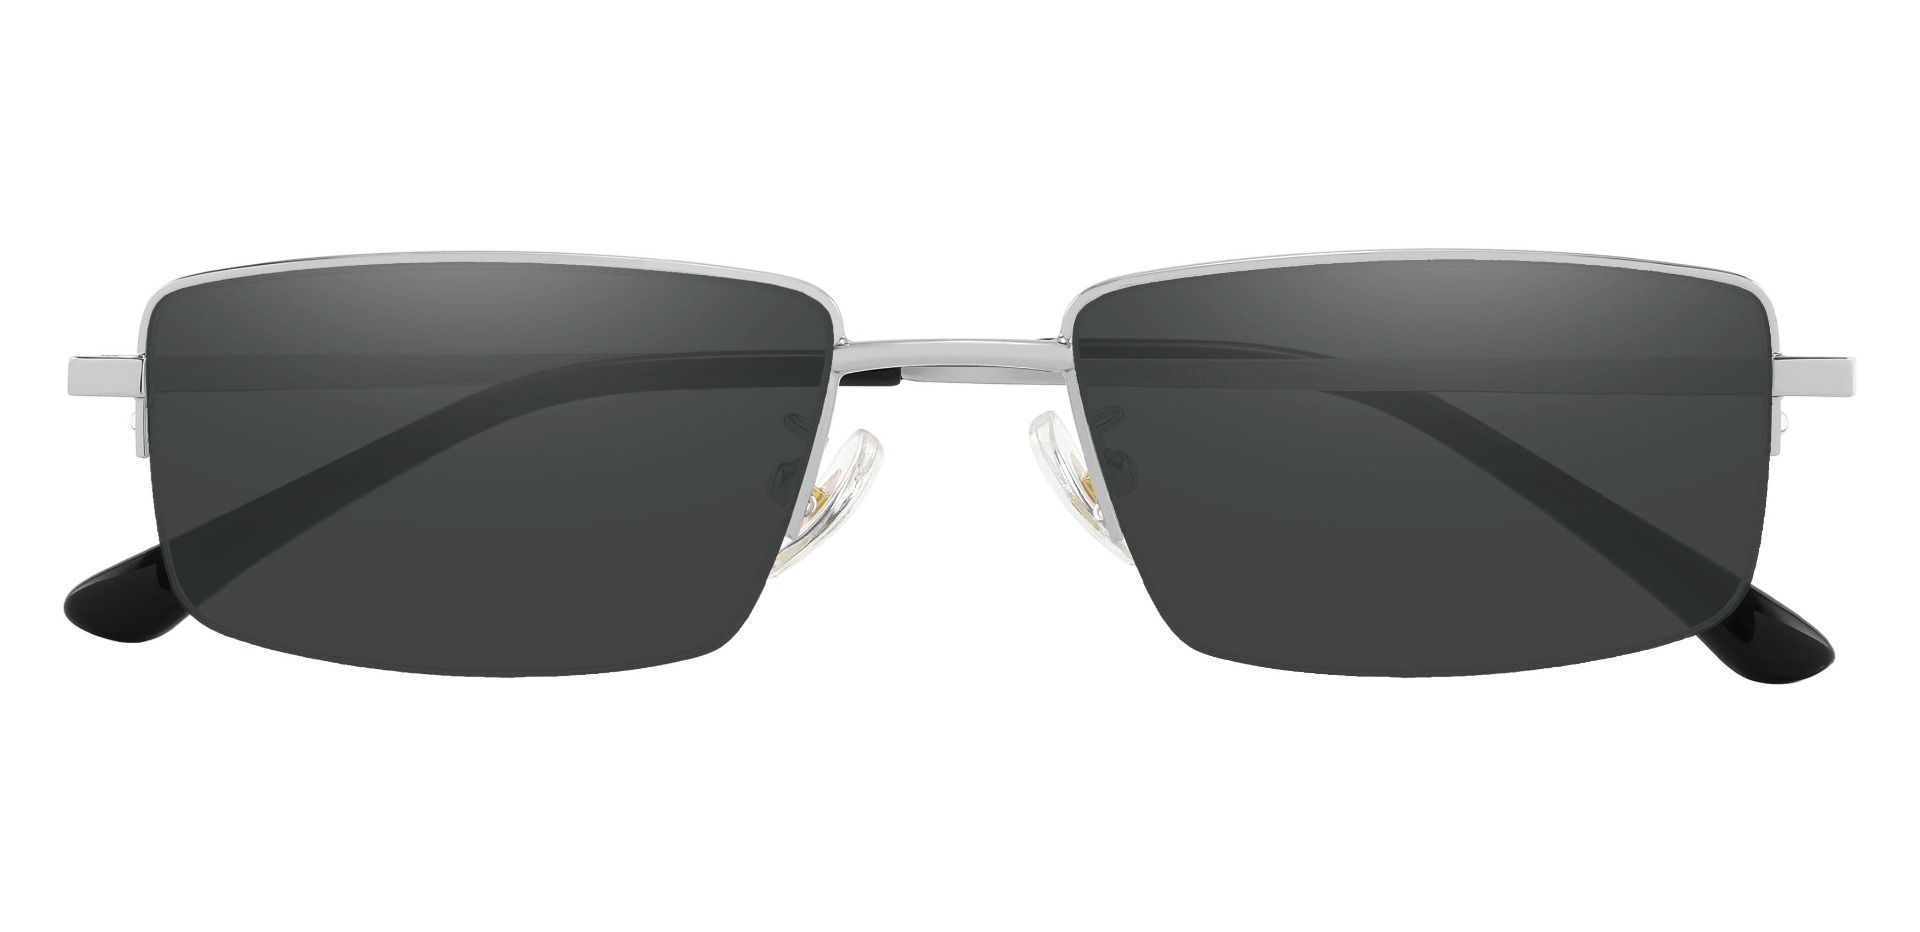 Waldo Rectangle Progressive Sunglasses - Silver Frame With Gray Lenses